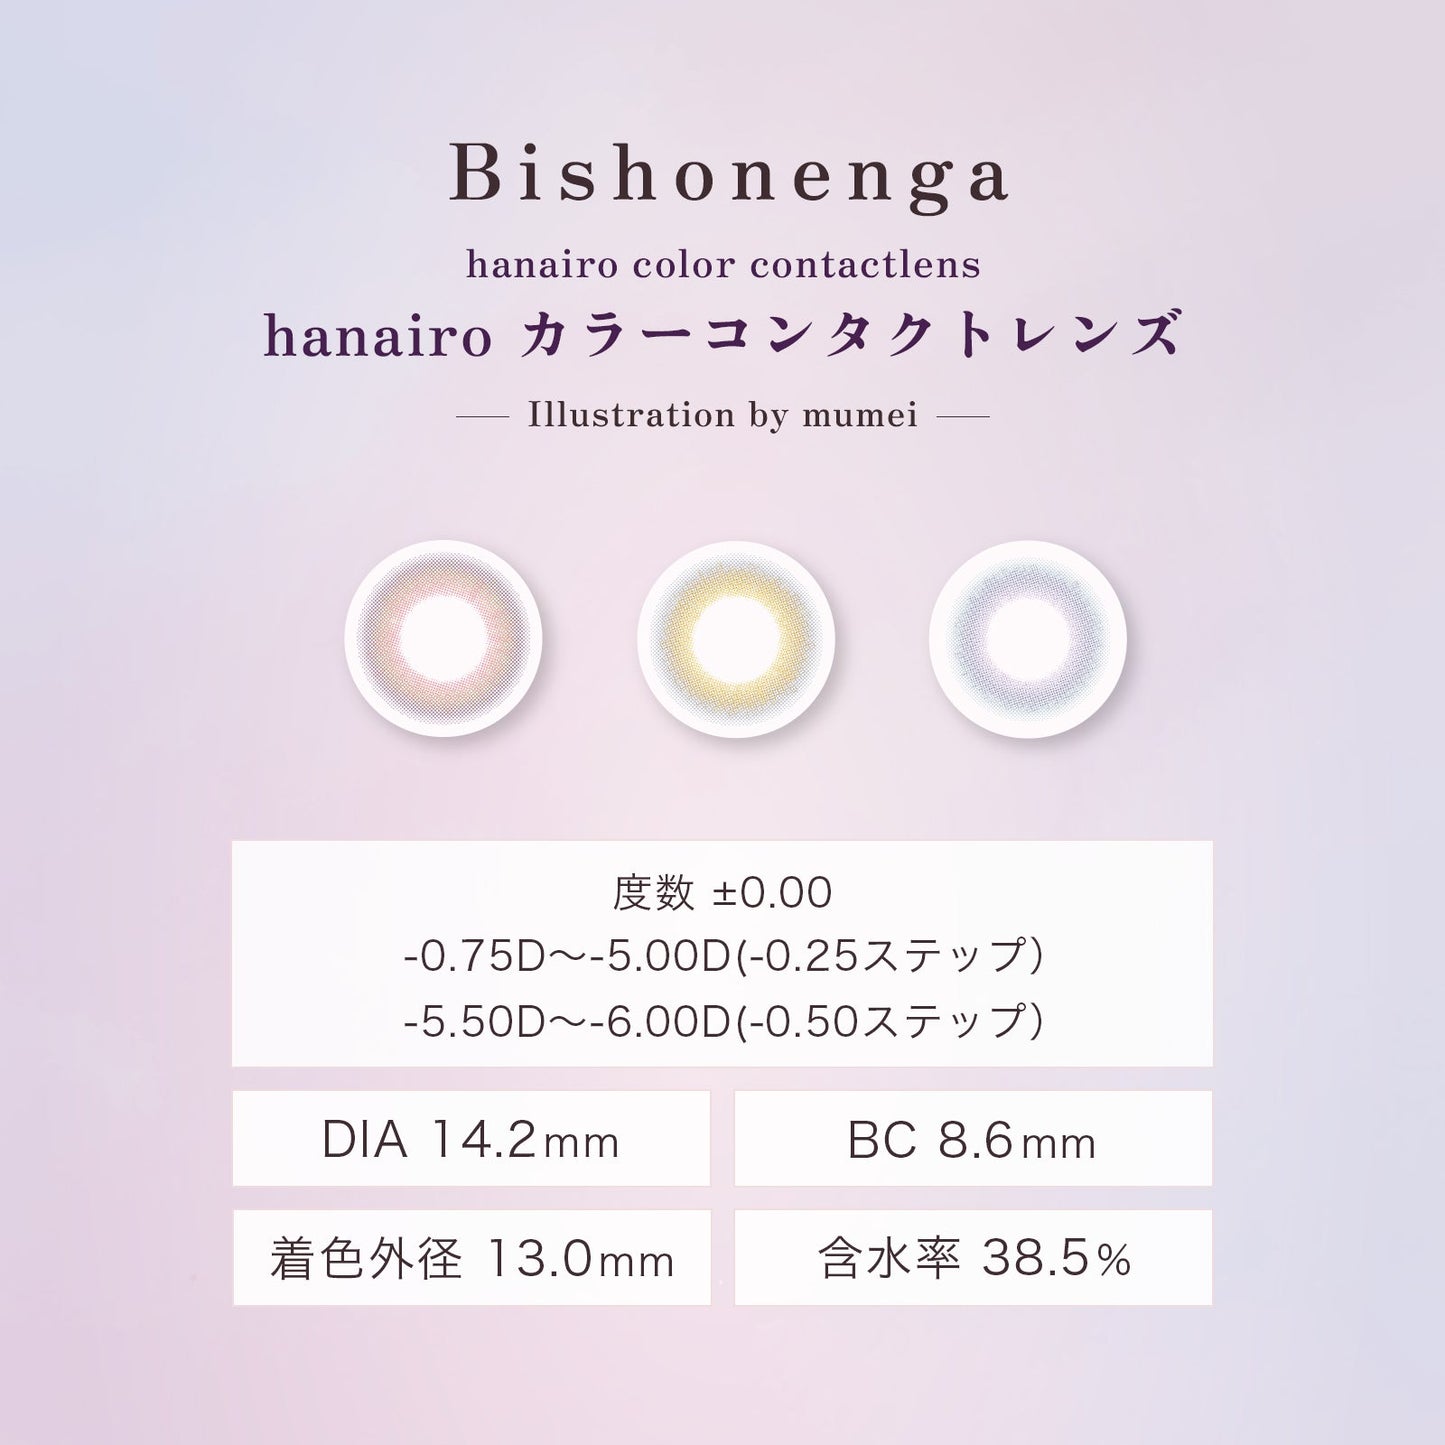 Bishonenga   hanairo カラーコンタクトレンズ  Illustration by mumei  金木犀 kinmokusei